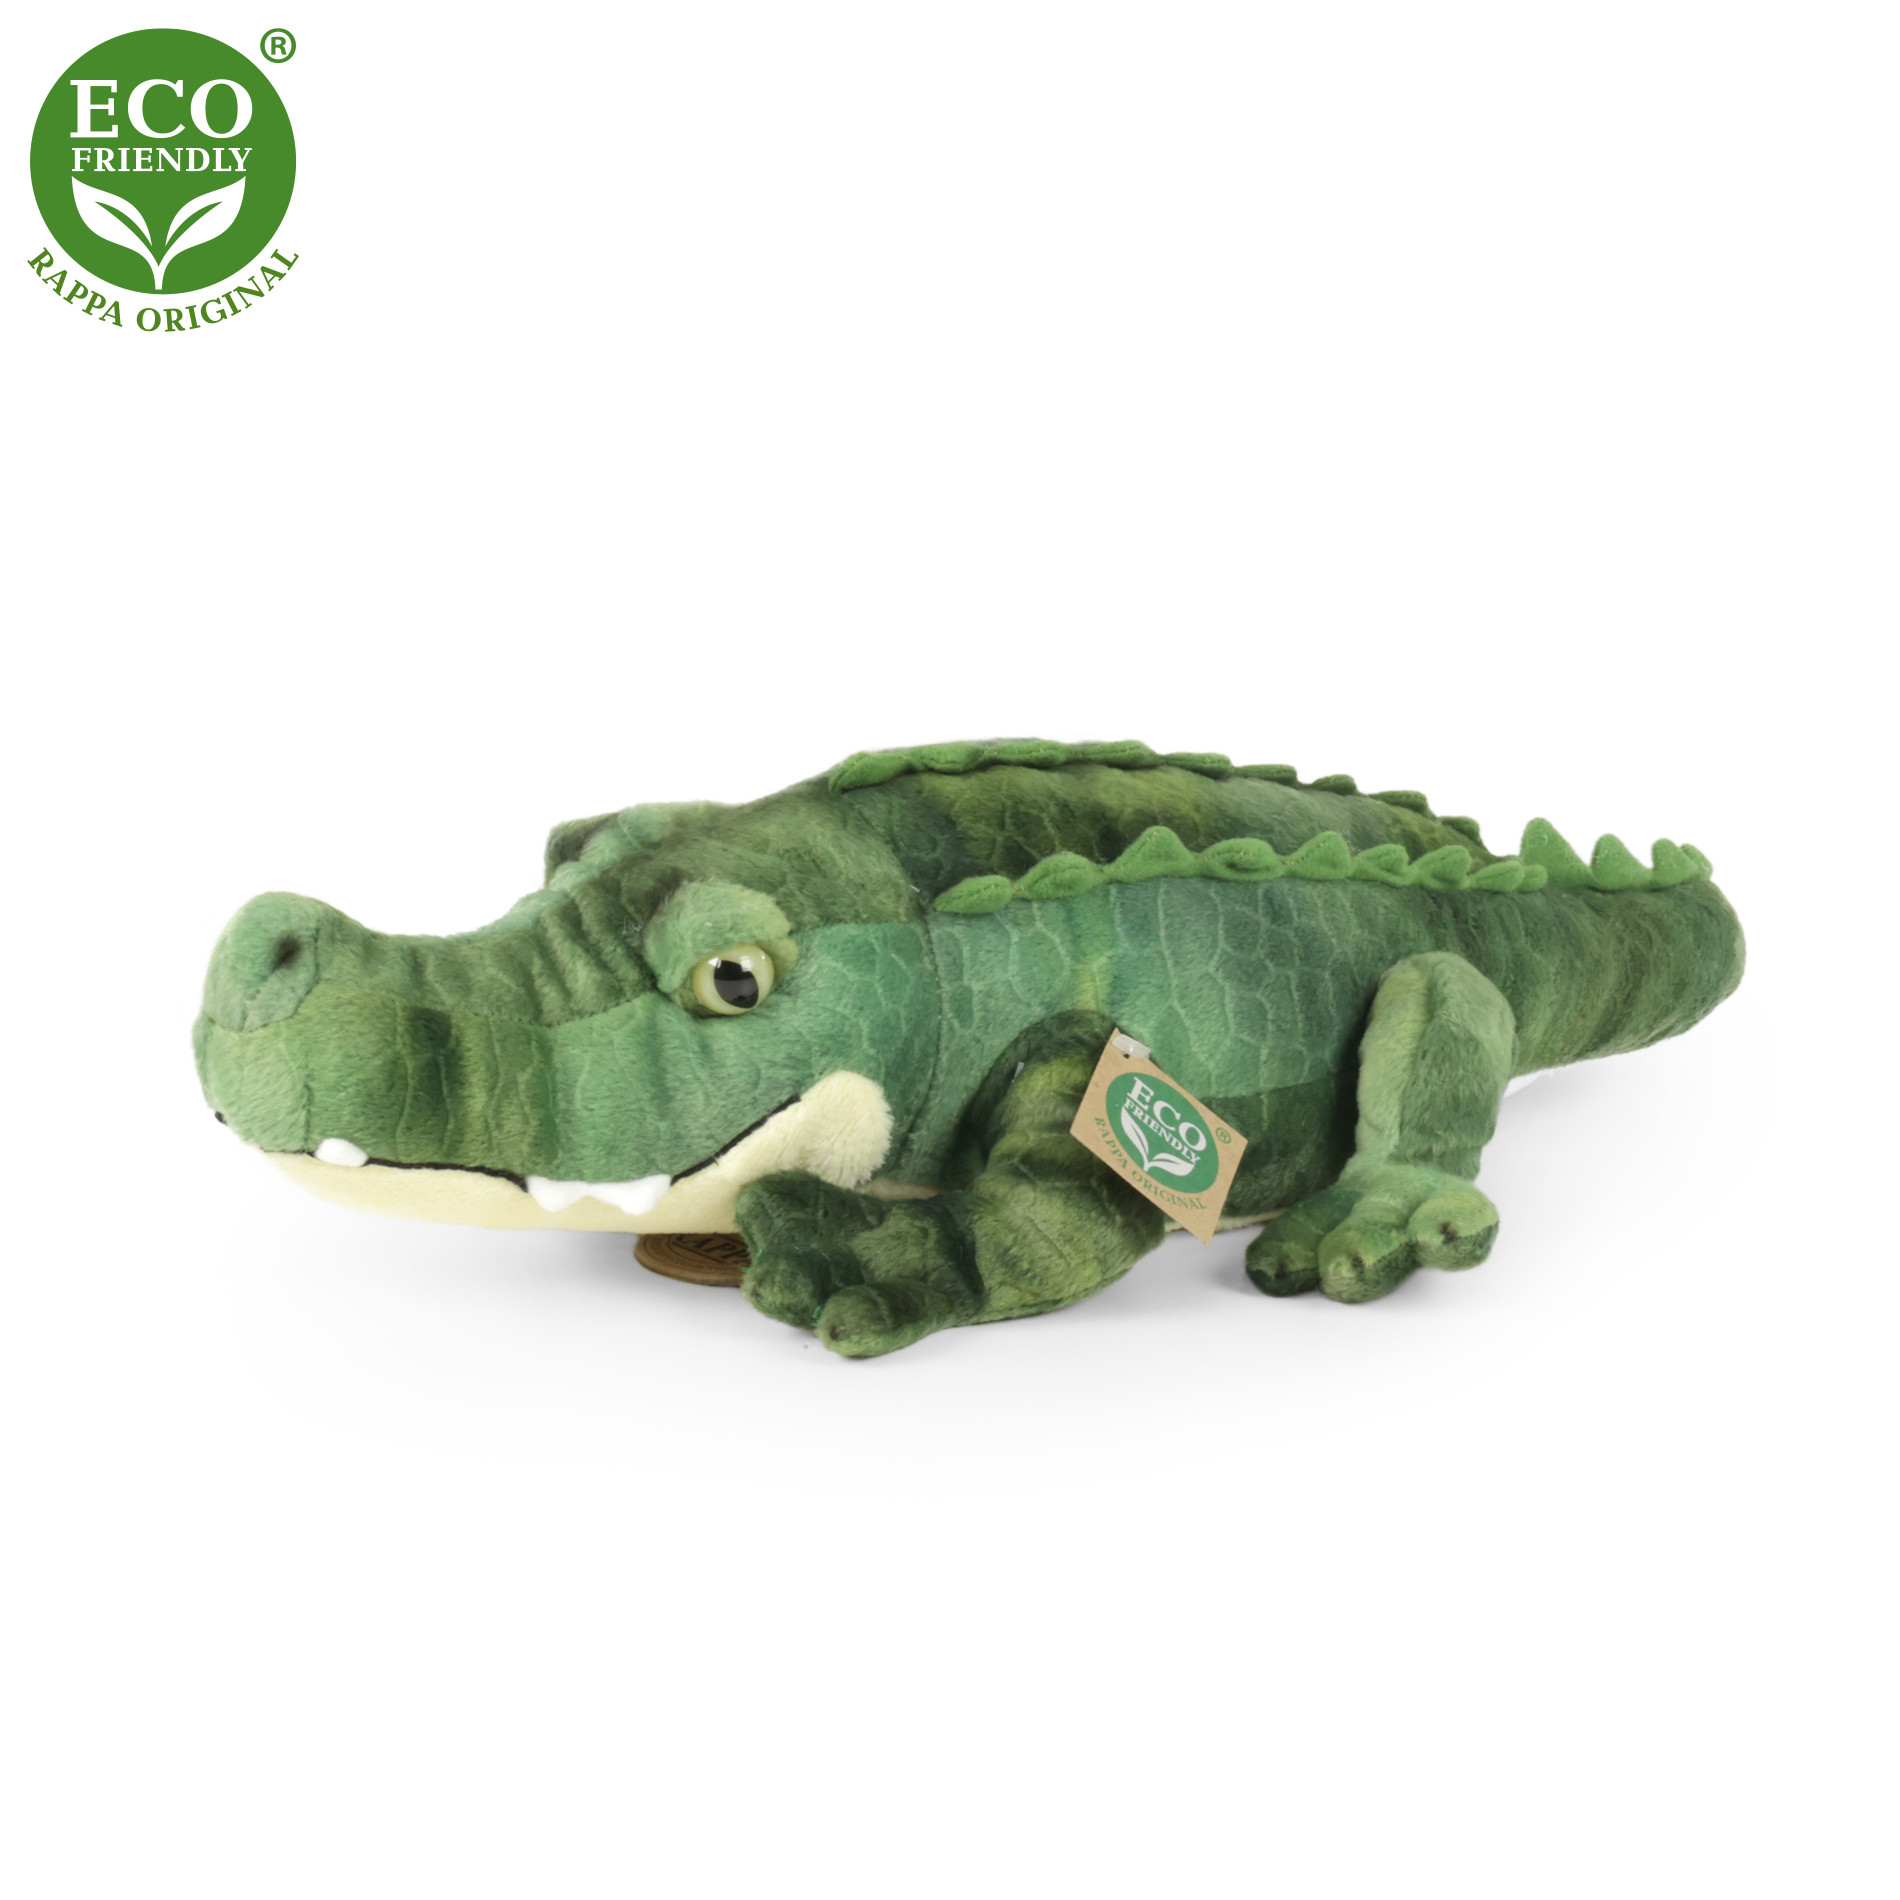 Plush crocodile 45 cm ECO-FRIENDLY